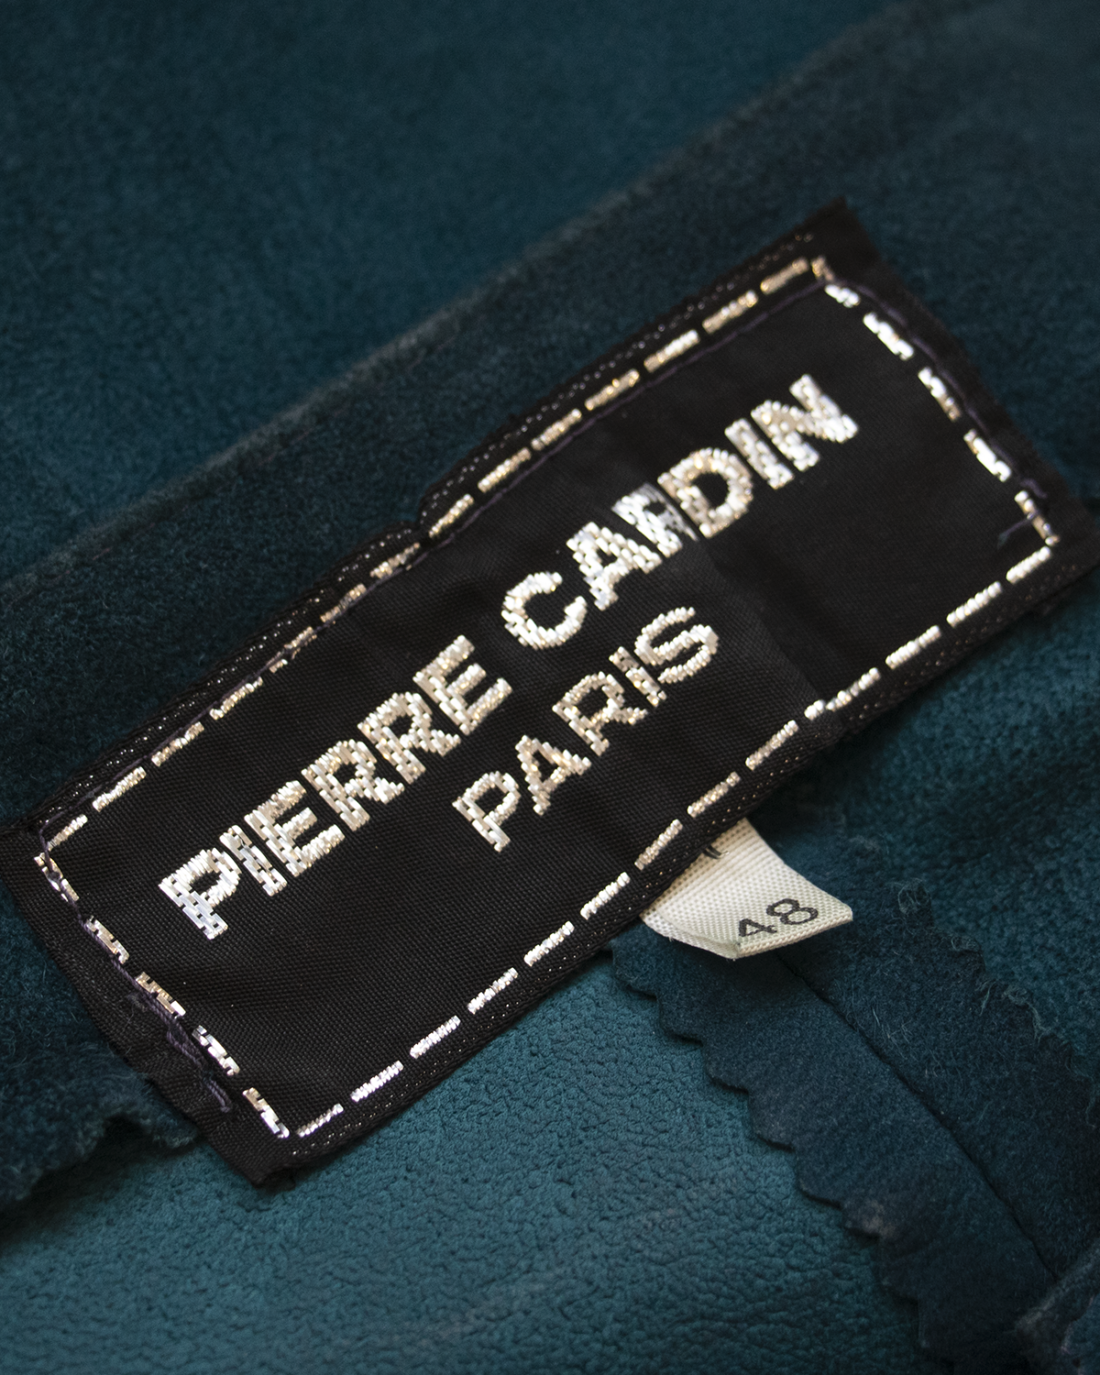 Pierre Cardin Blue Blouse from 1990s